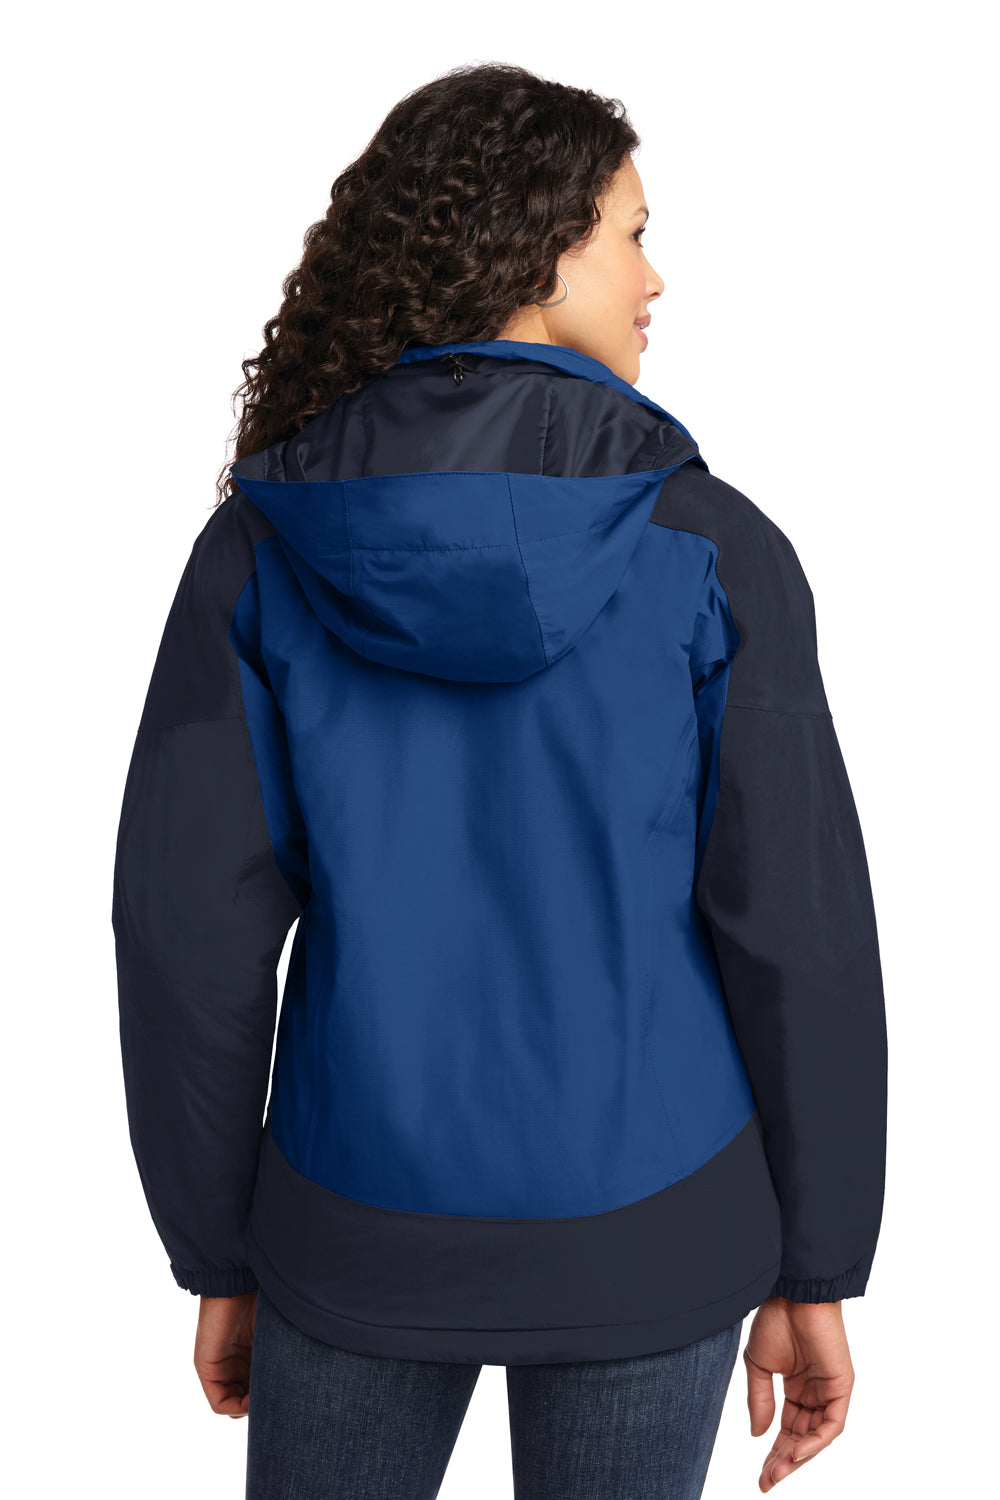 Port Authority L792 Womens Nootka Waterproof Full Zip Hooded Jacket Regatta Blue/Navy Blue Back